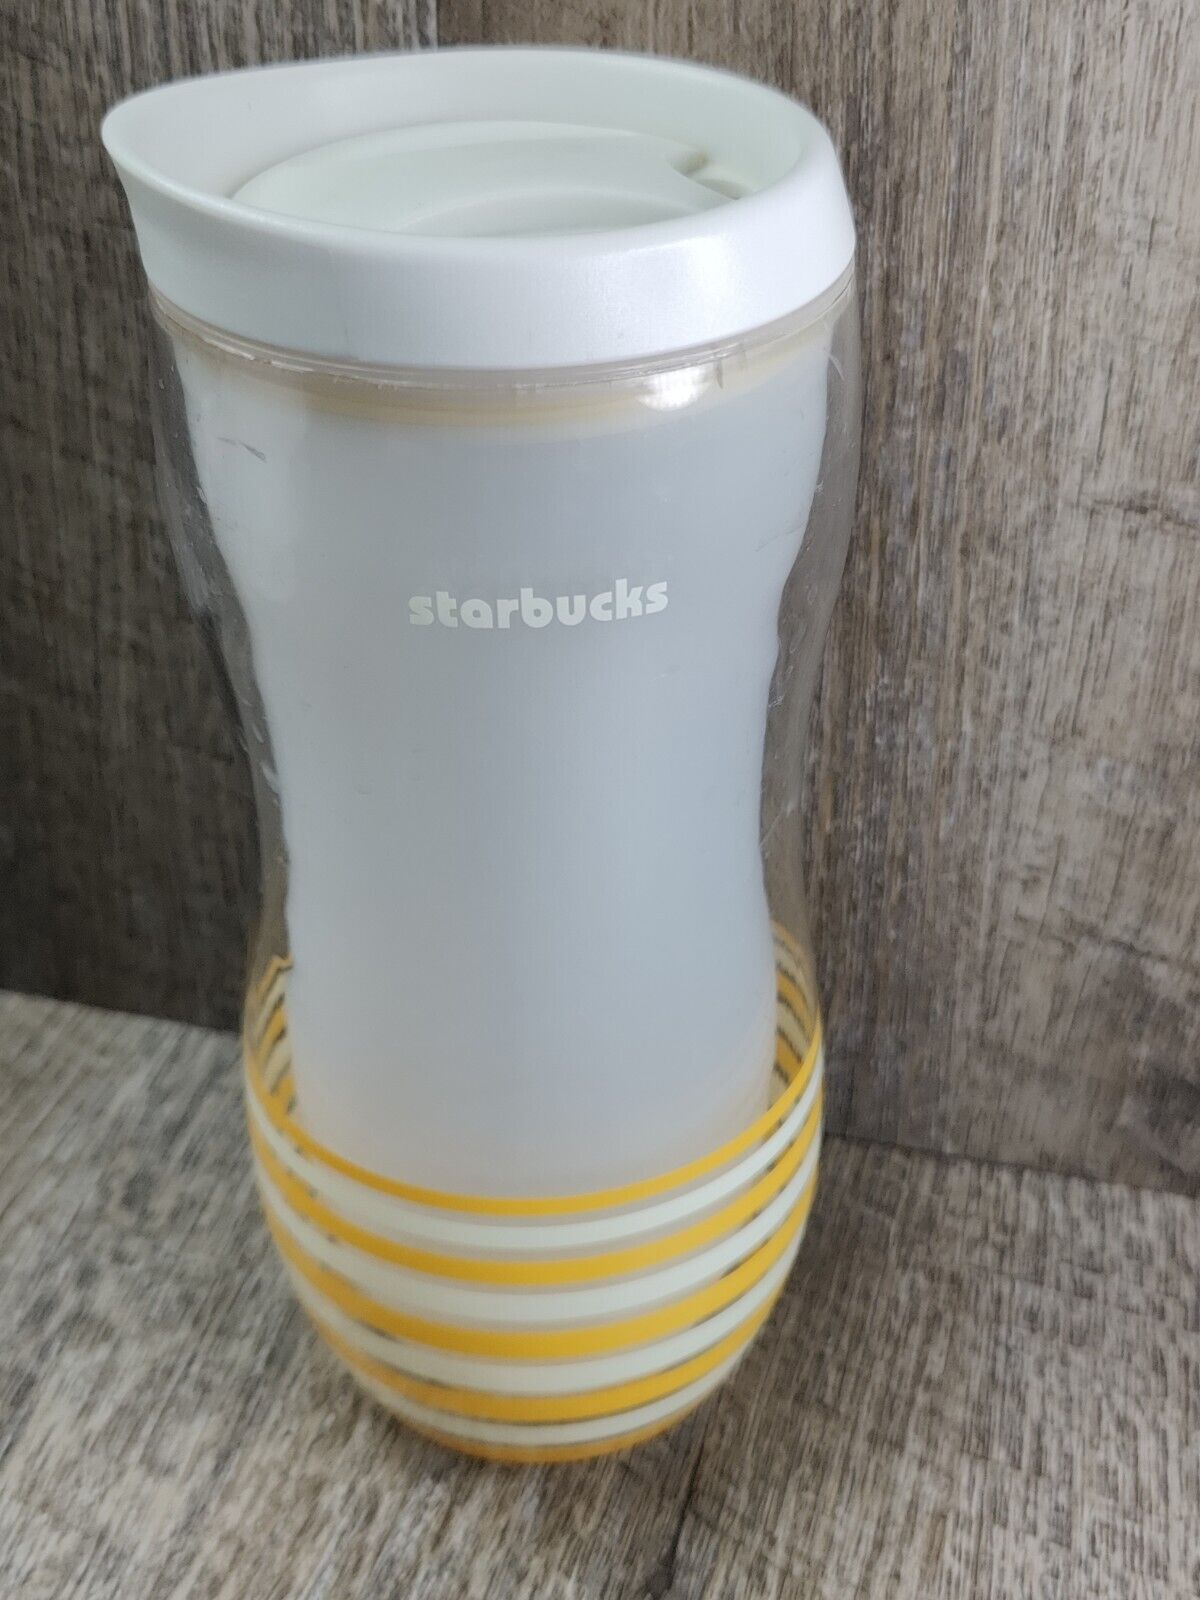 Vintage Starbucks beverage cup 2004 Plastic Tumbler 16 oz Yellow White Stripes.